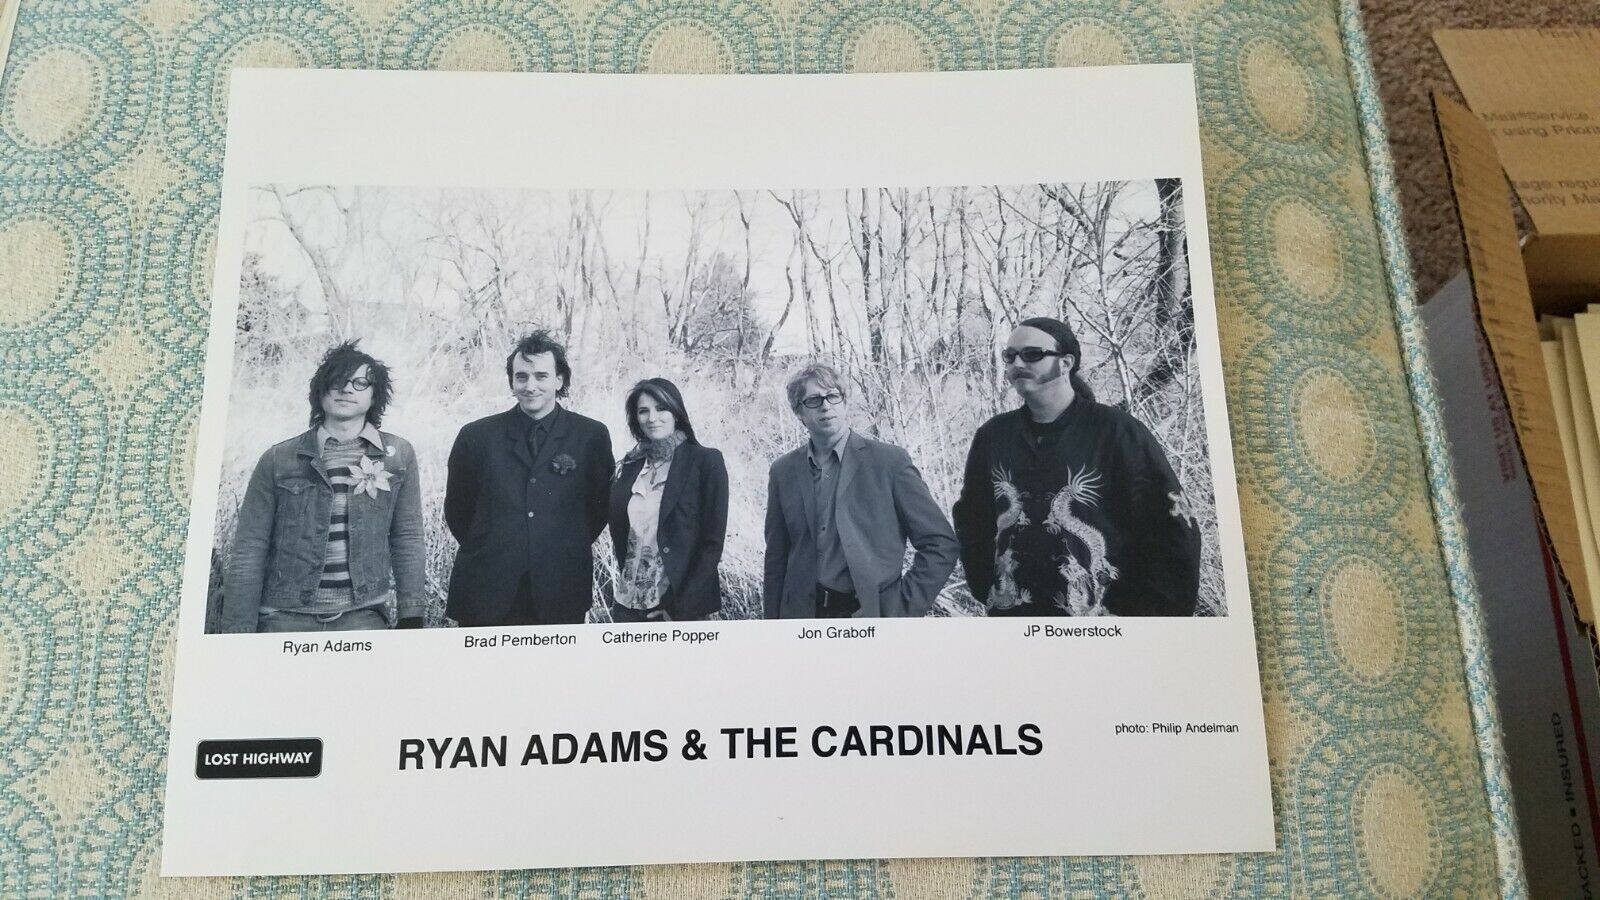 RC704 Band 8x10 Press Photo PROMO MEDIA  RYAN ADAMS & THE CARDINALS, LOST HWY